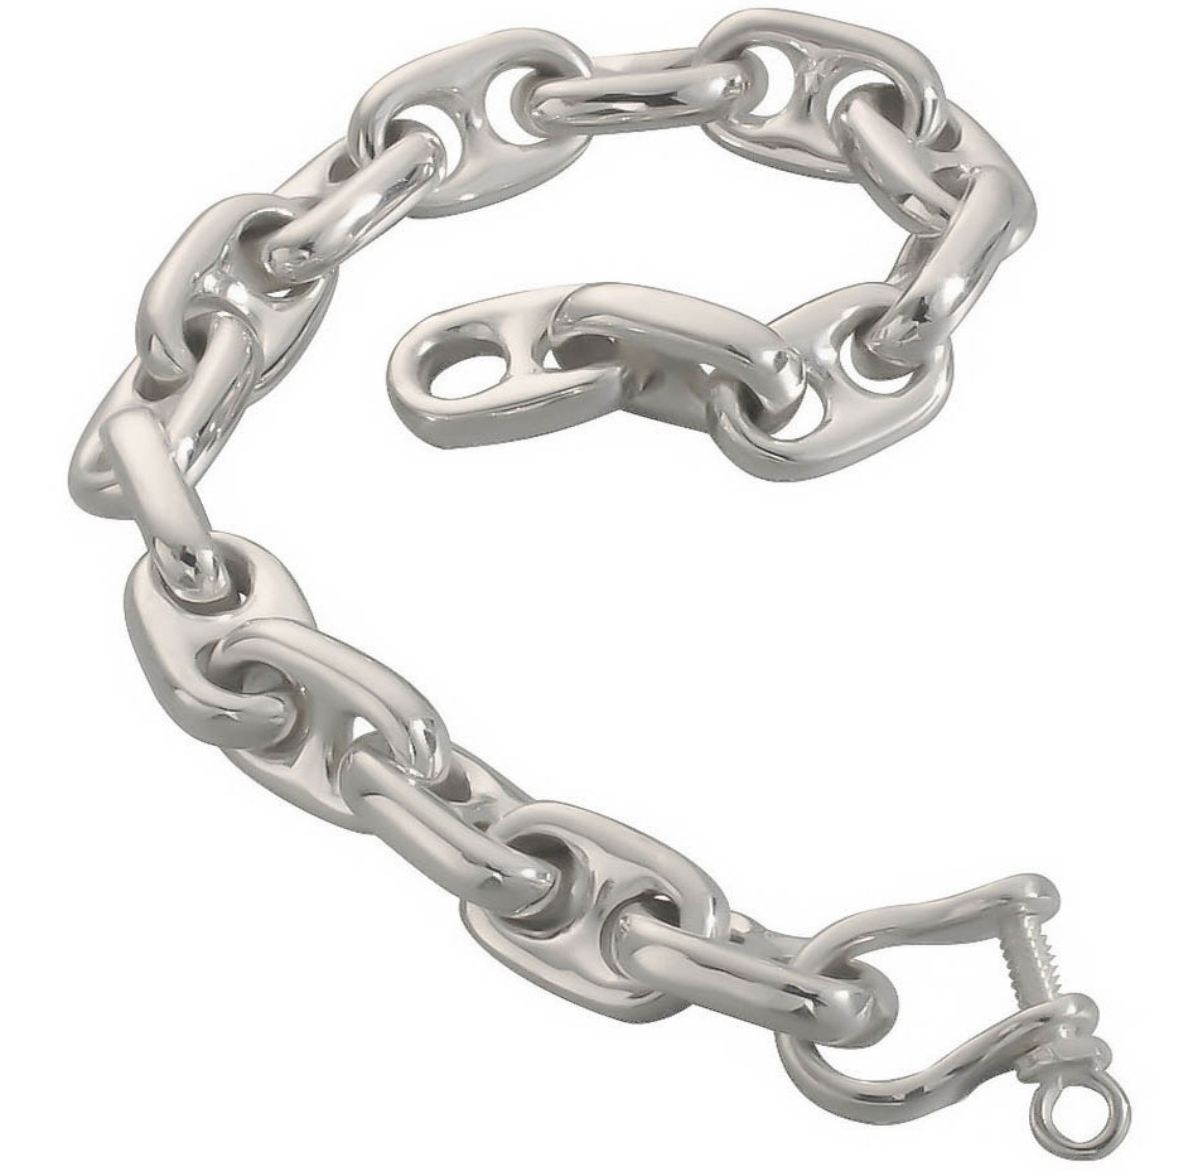 【OVY】Silver Anchor Chain Bracelet 新品未使用品✅新品未使用品